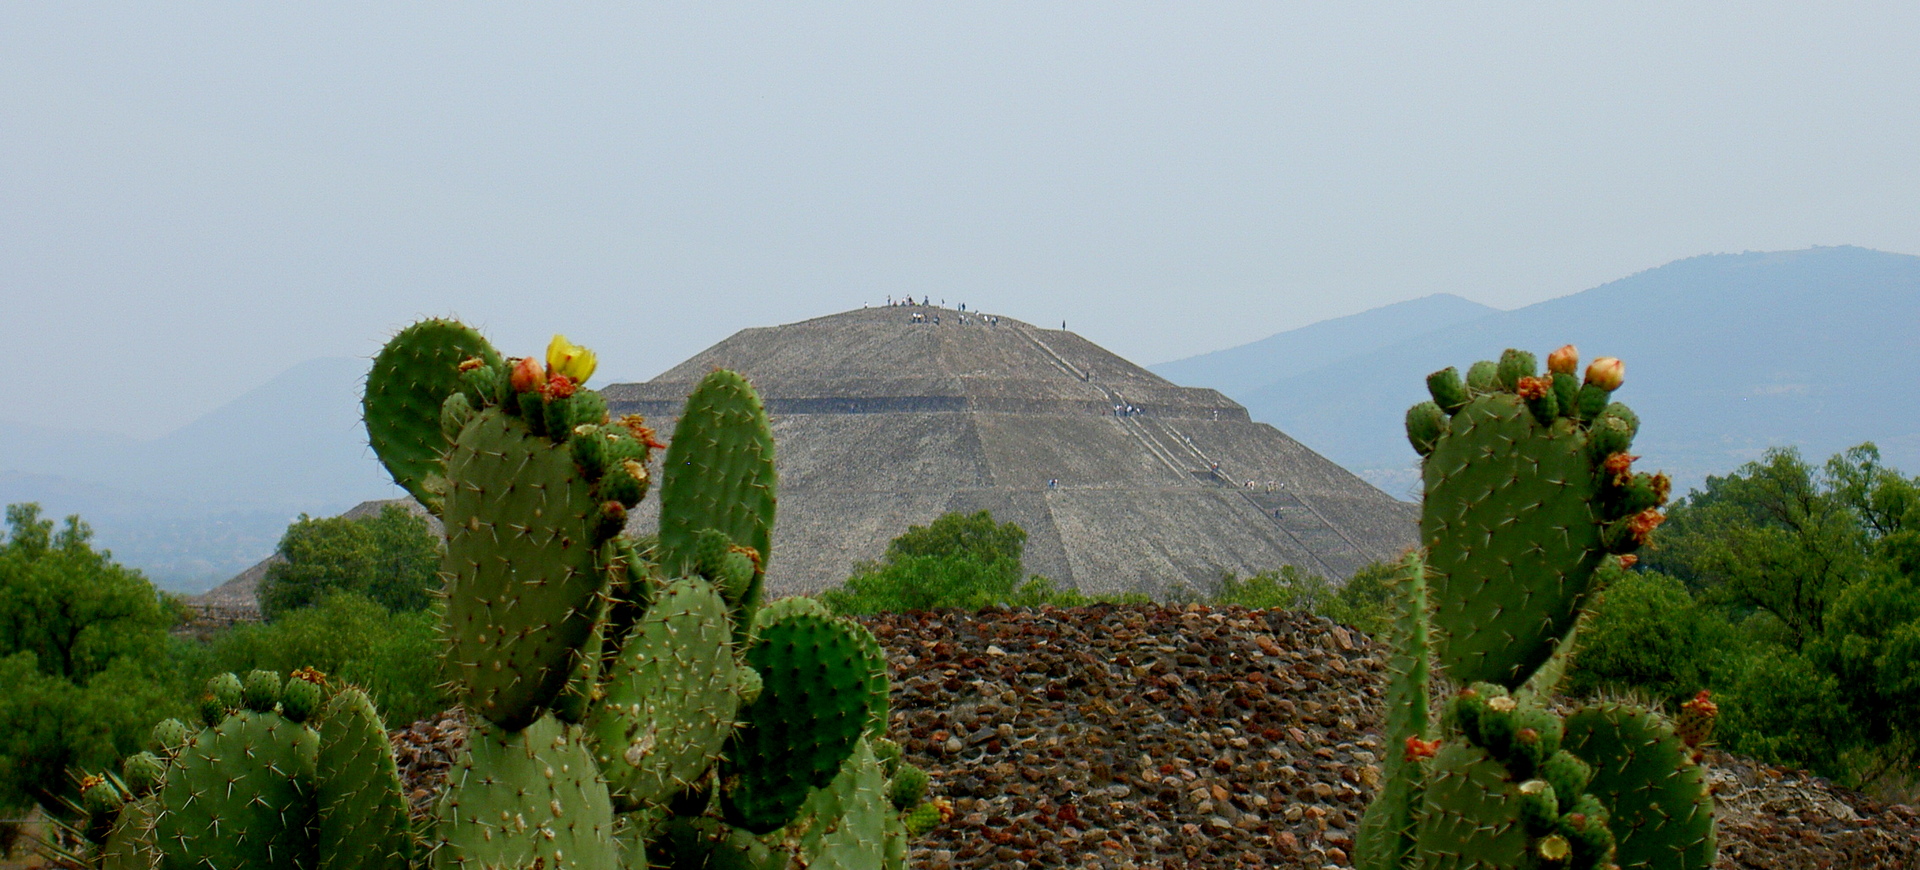 Люди на вершине пирамиды Теотиуакана